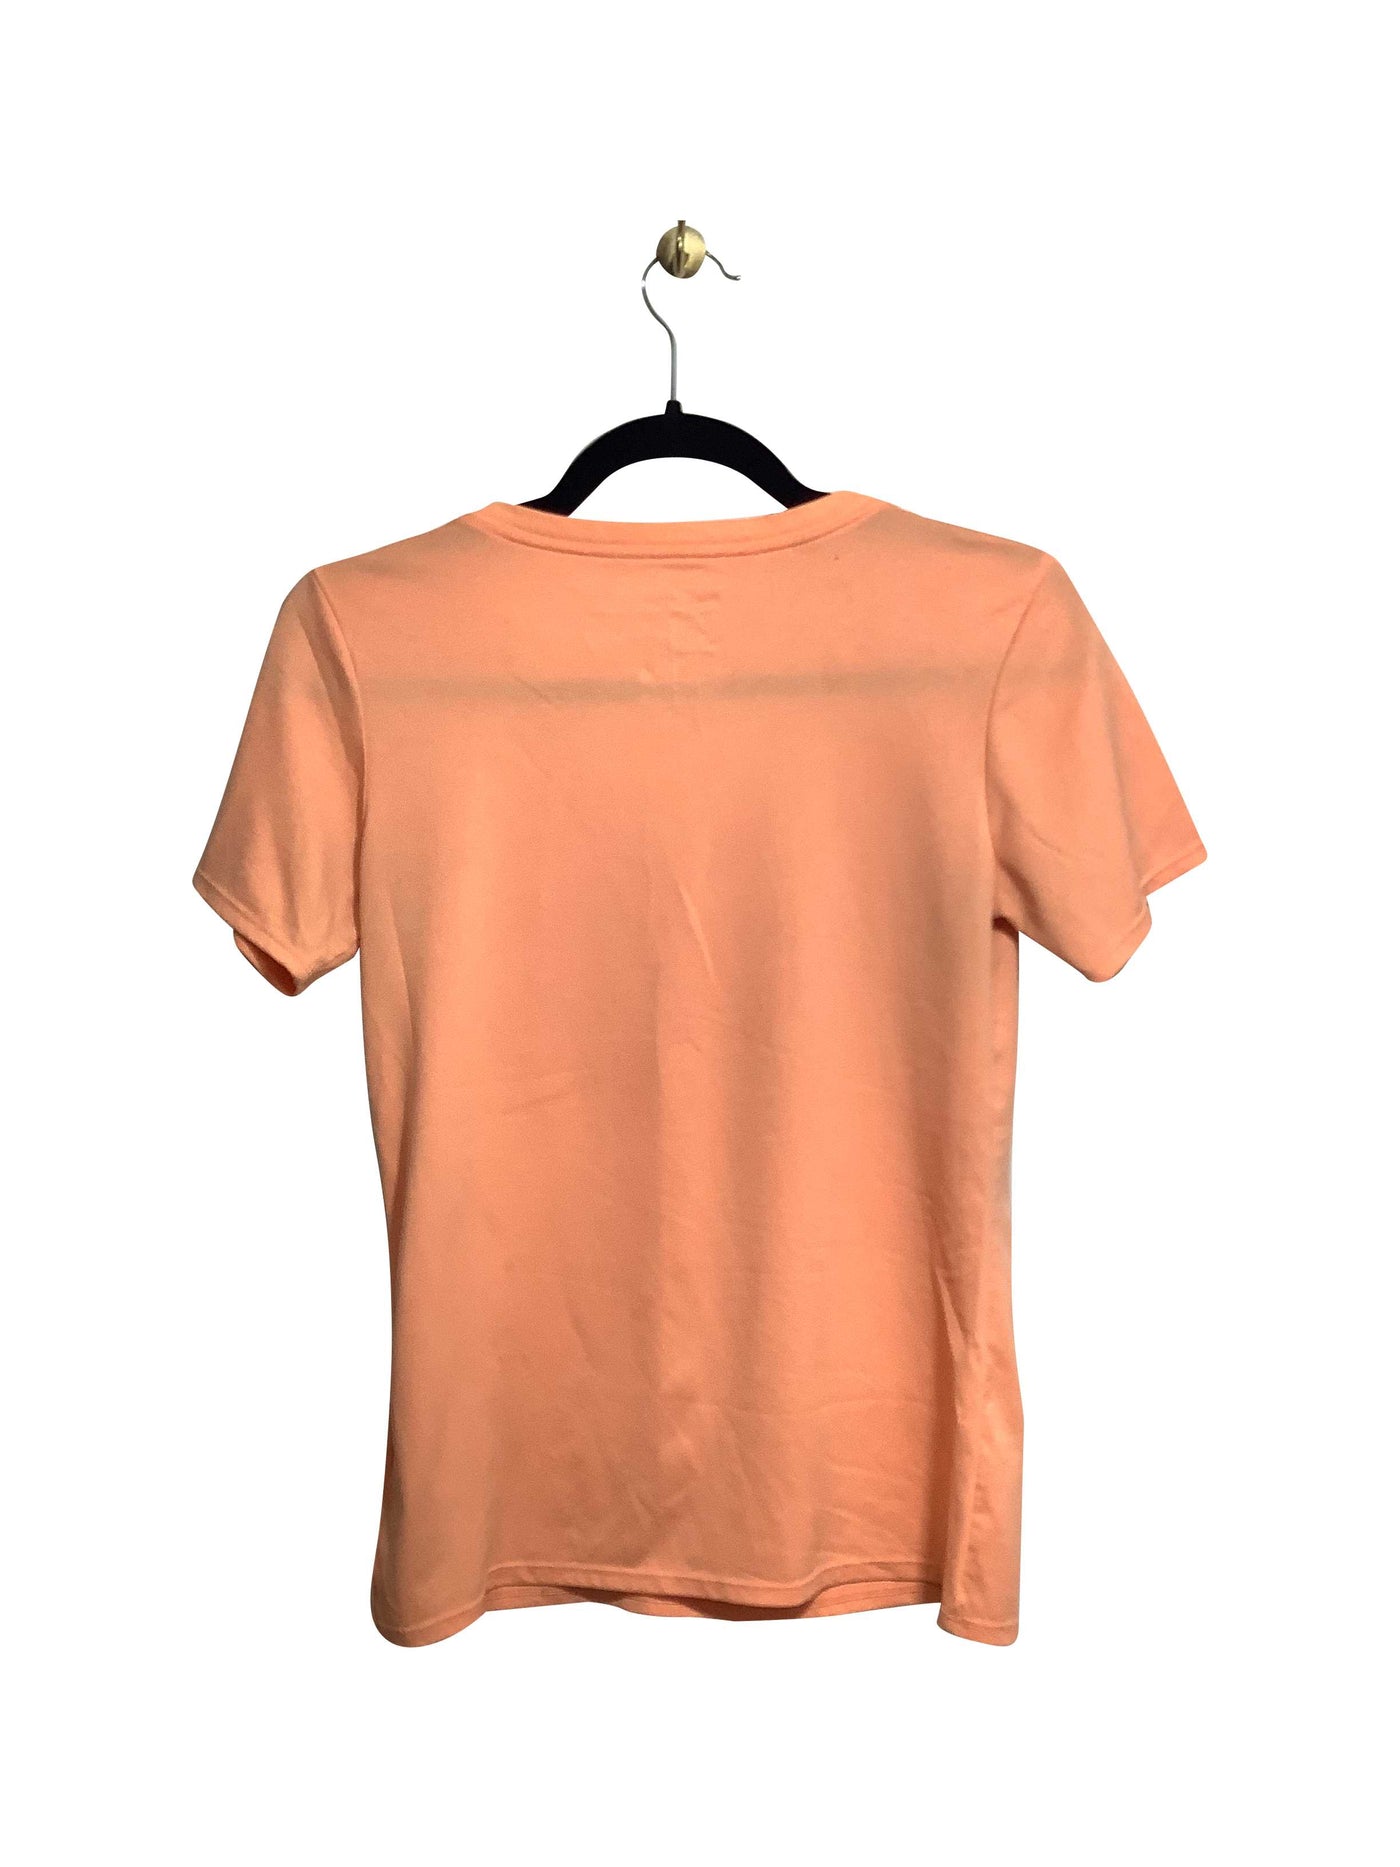 NIKE Regular fit Activewear Top in Orange - S   Koop